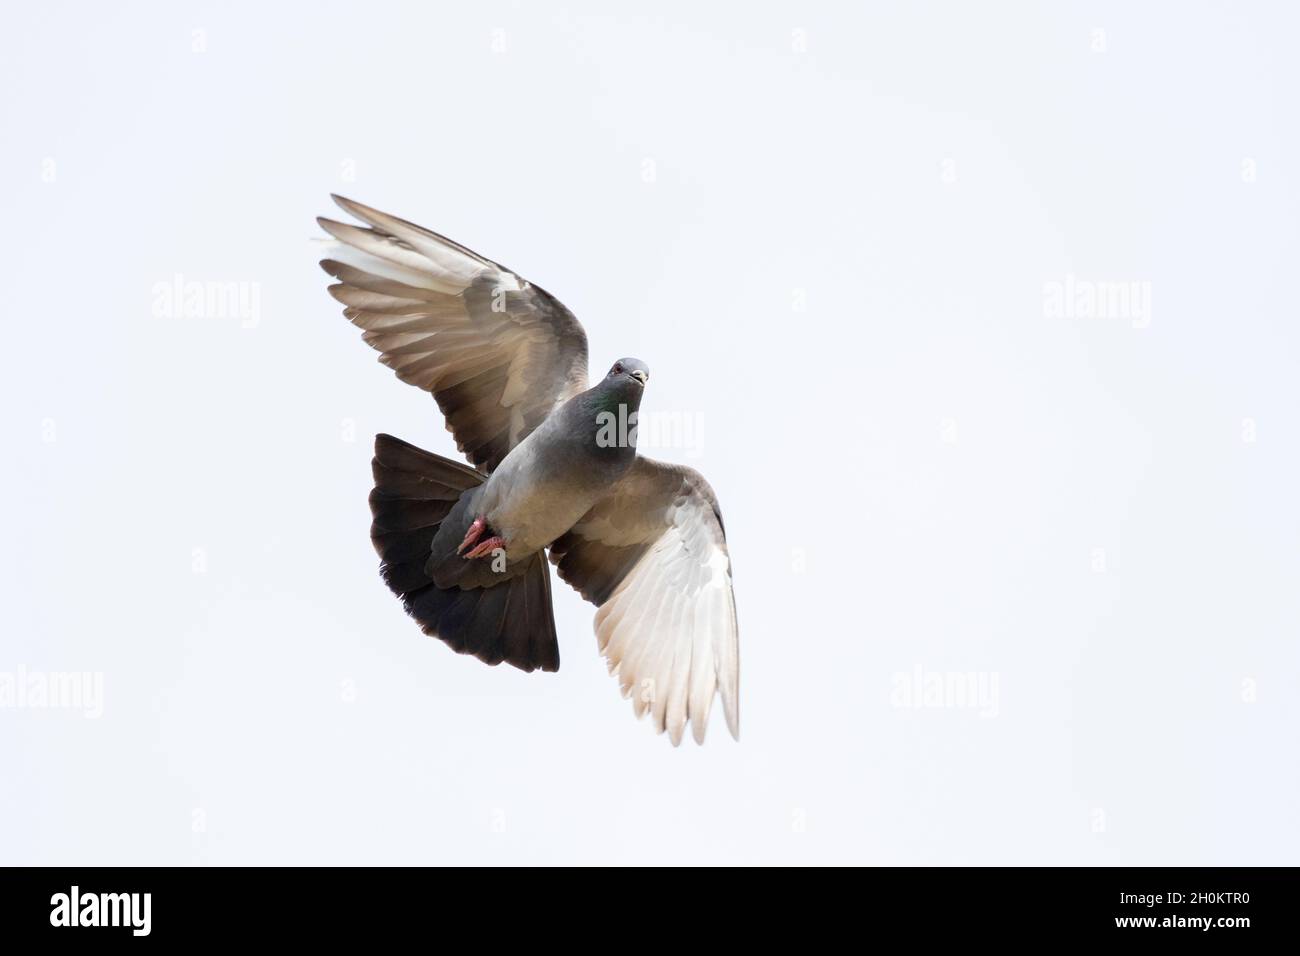 Image of pigeons flying on sky. Animal. Birds. Stock Photo